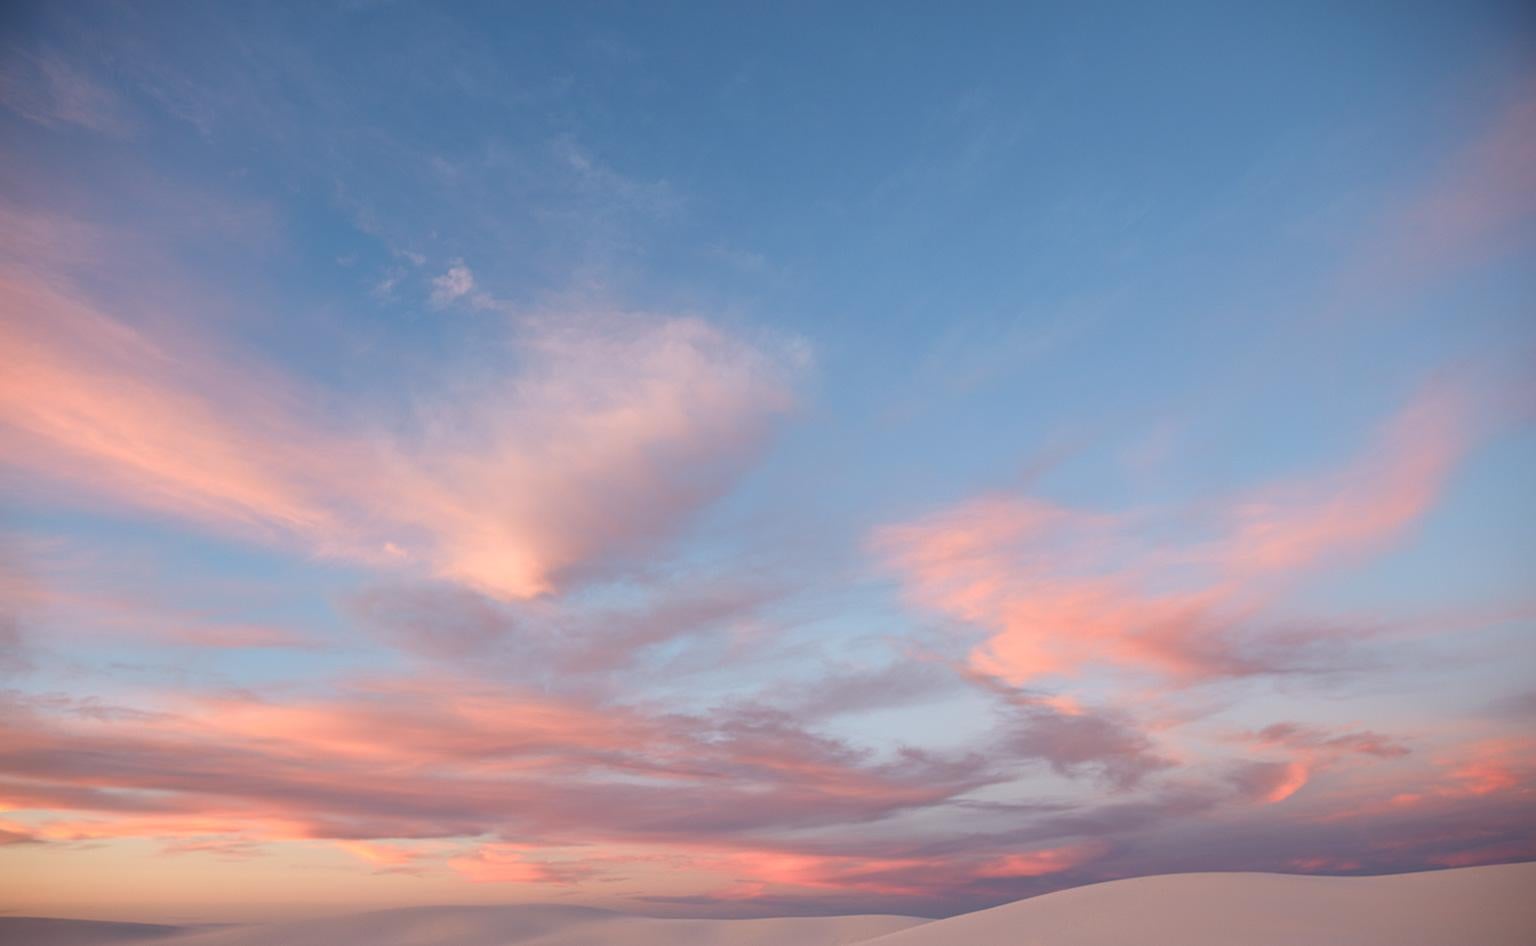 Cloud Study VI - large scale photograph of dramatic momochromatic cloudscape sky For Sale 1